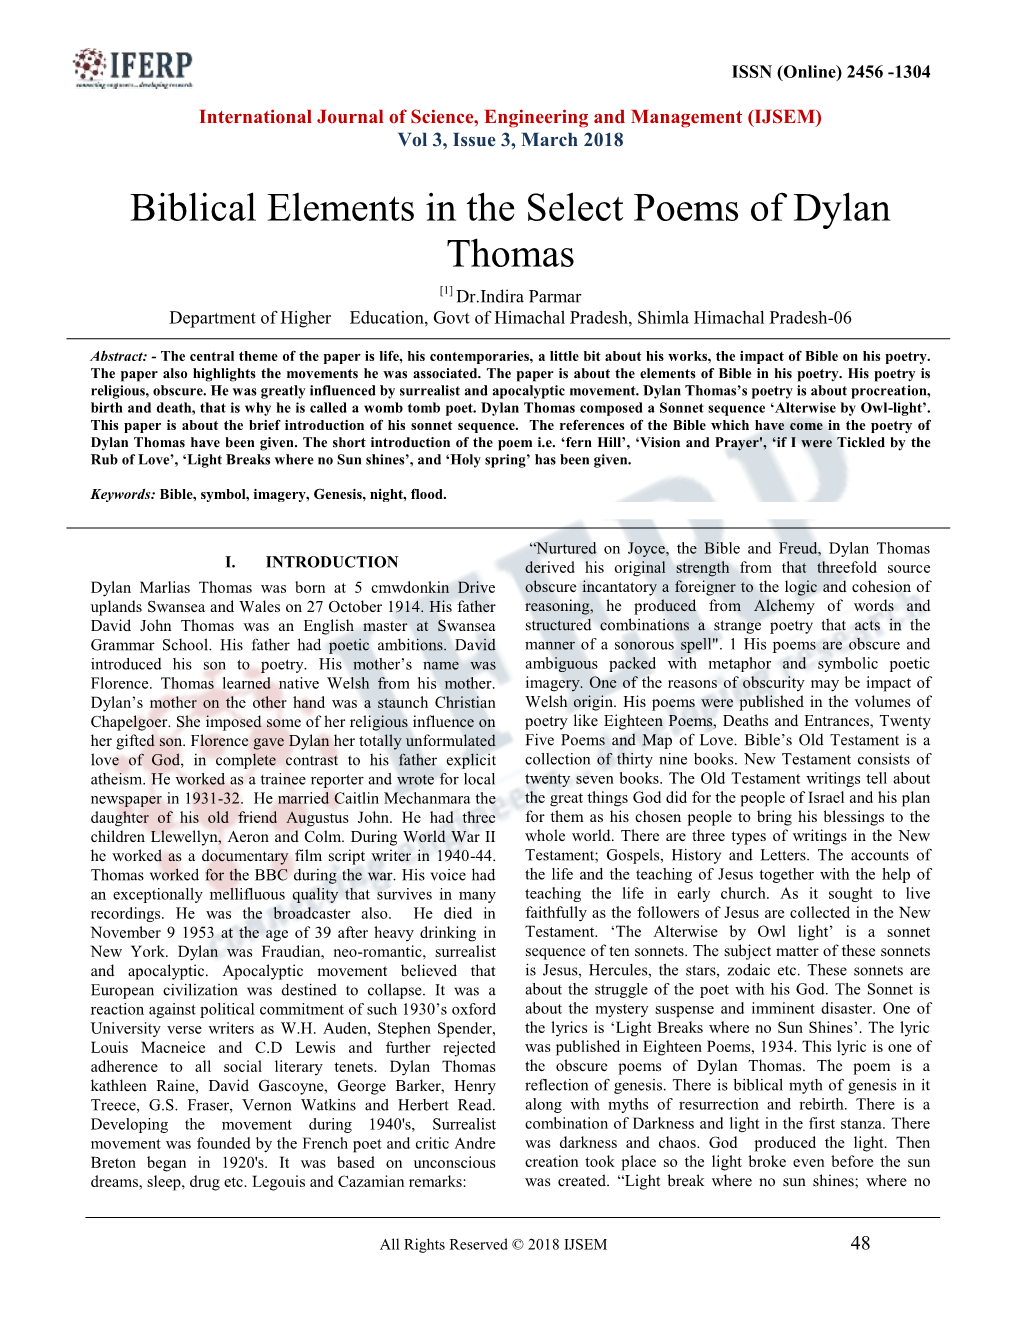 Biblical Elements in the Select Poems of Dylan Thomas [1] Dr.Indira Parmar Department of Higher Education, Govt of Himachal Pradesh, Shimla Himachal Pradesh-06